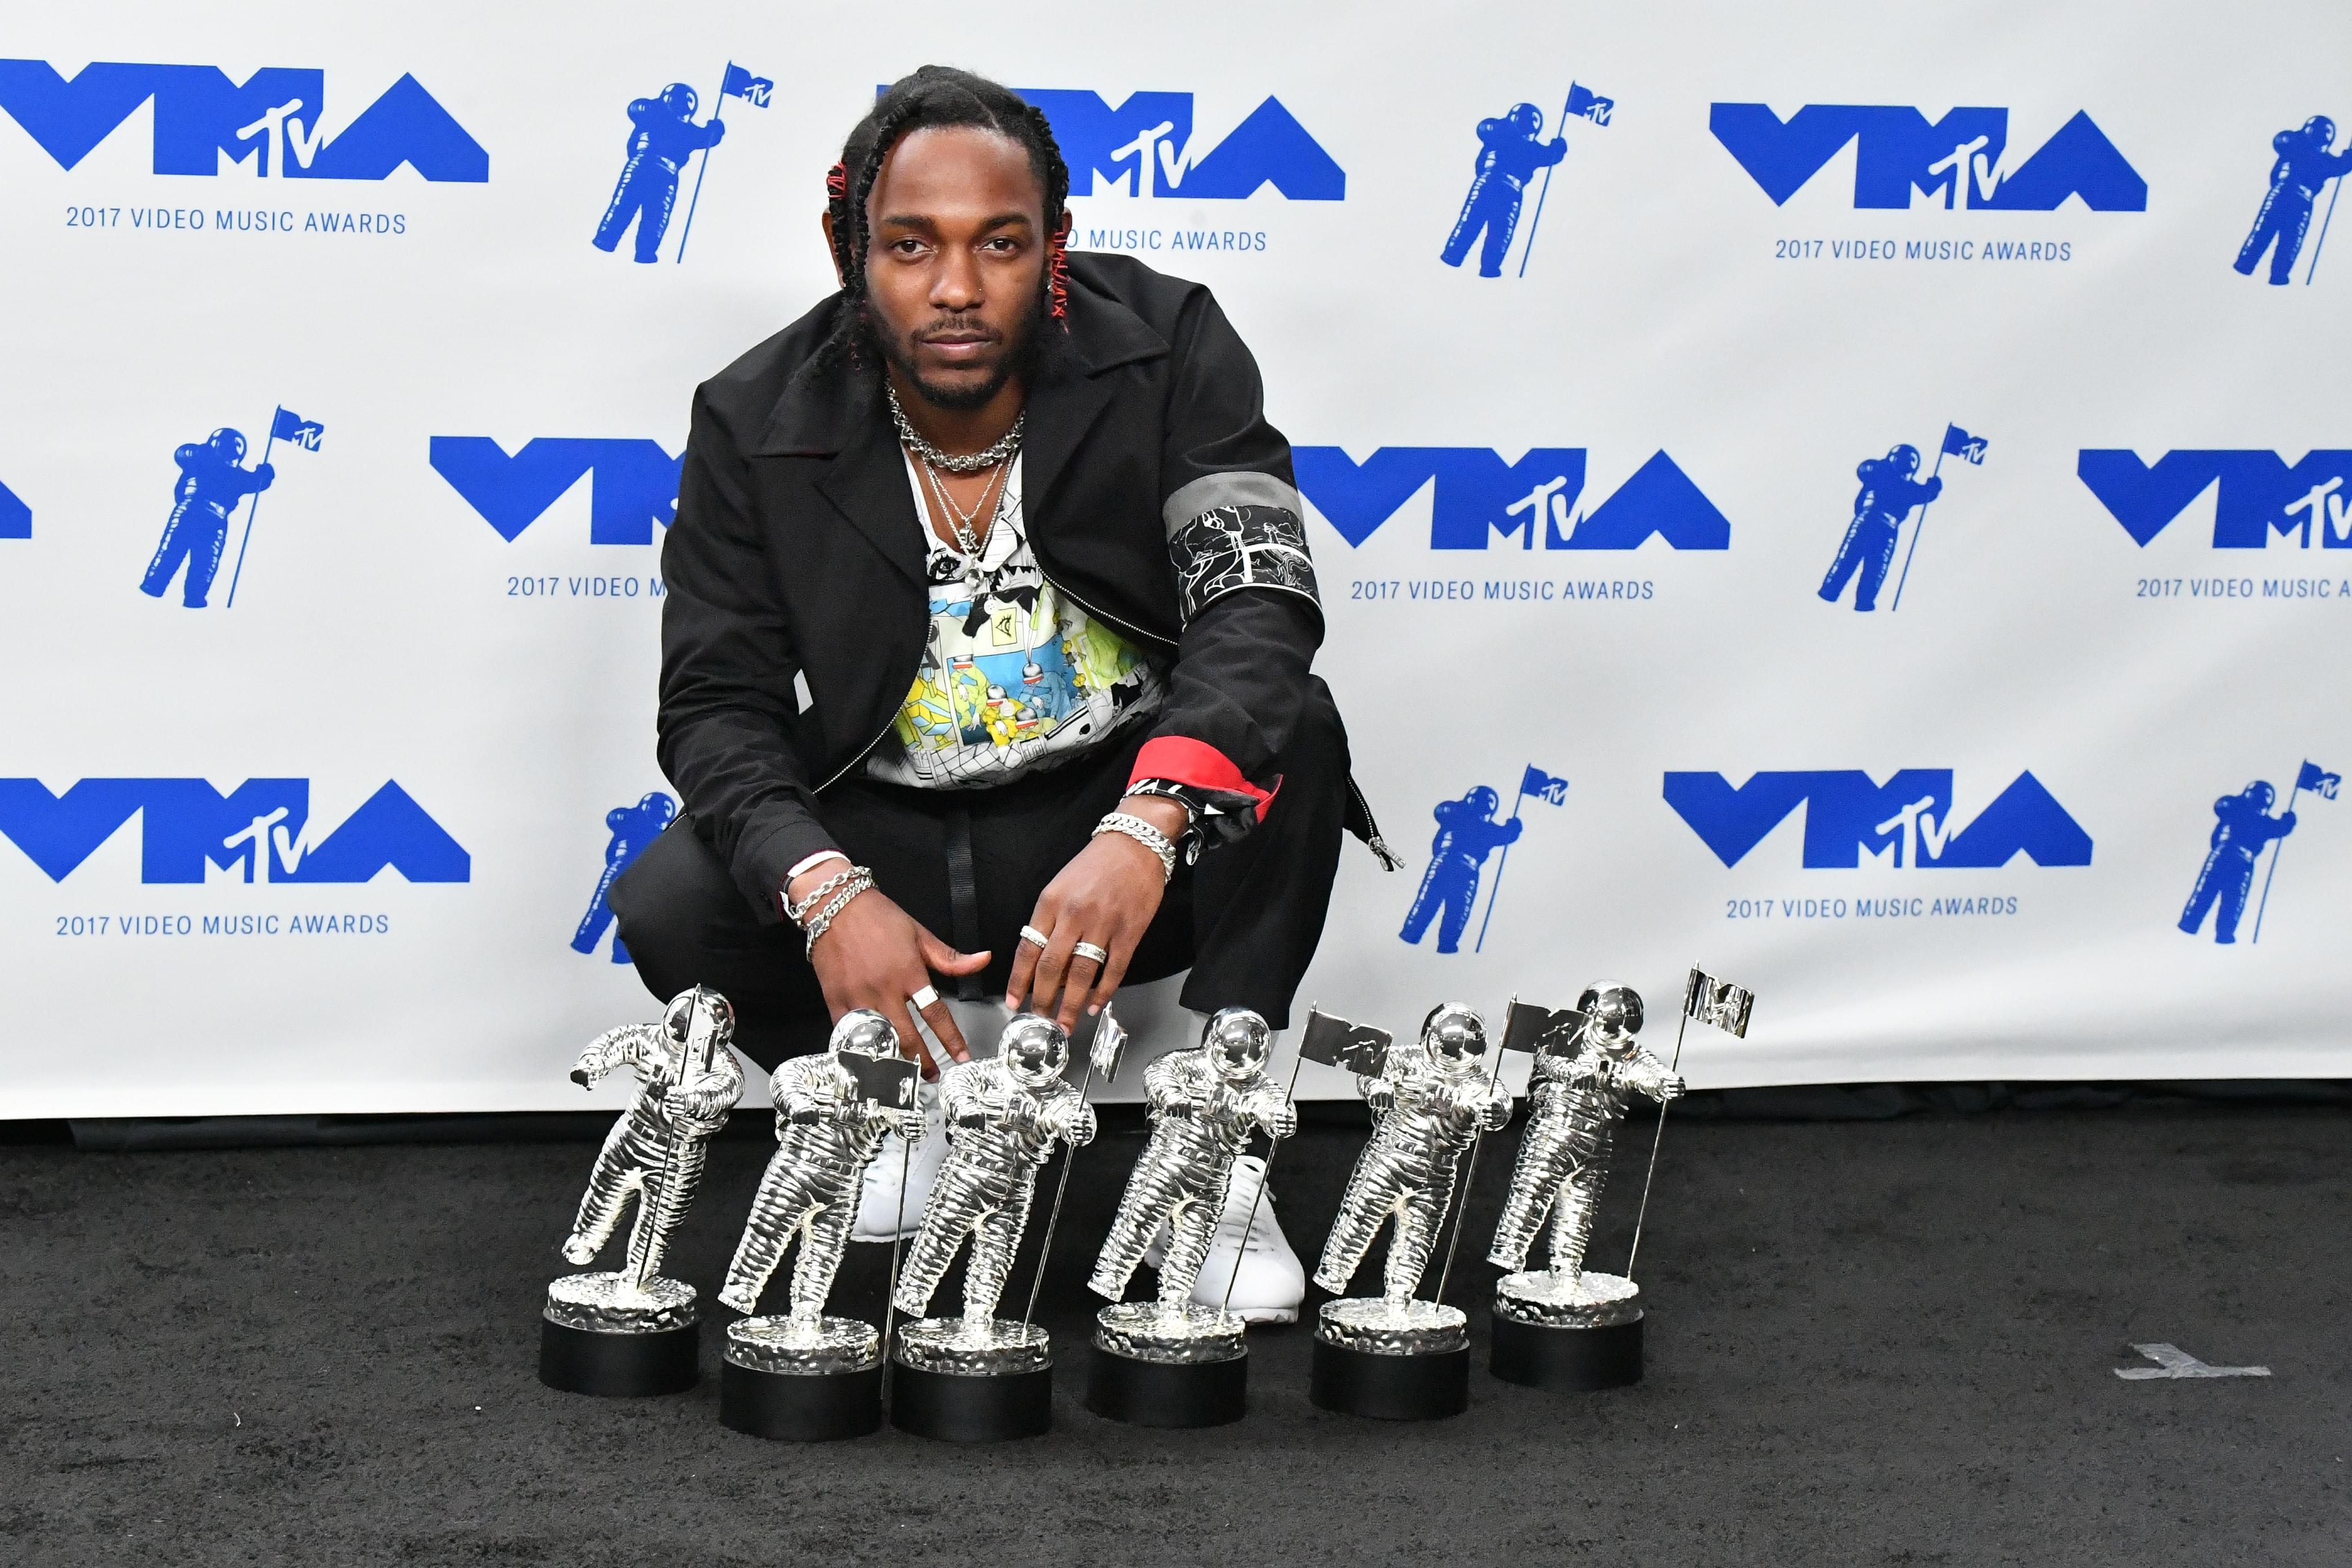 WATCH Kendrick Lamar’s Fire Performance At The VMAs